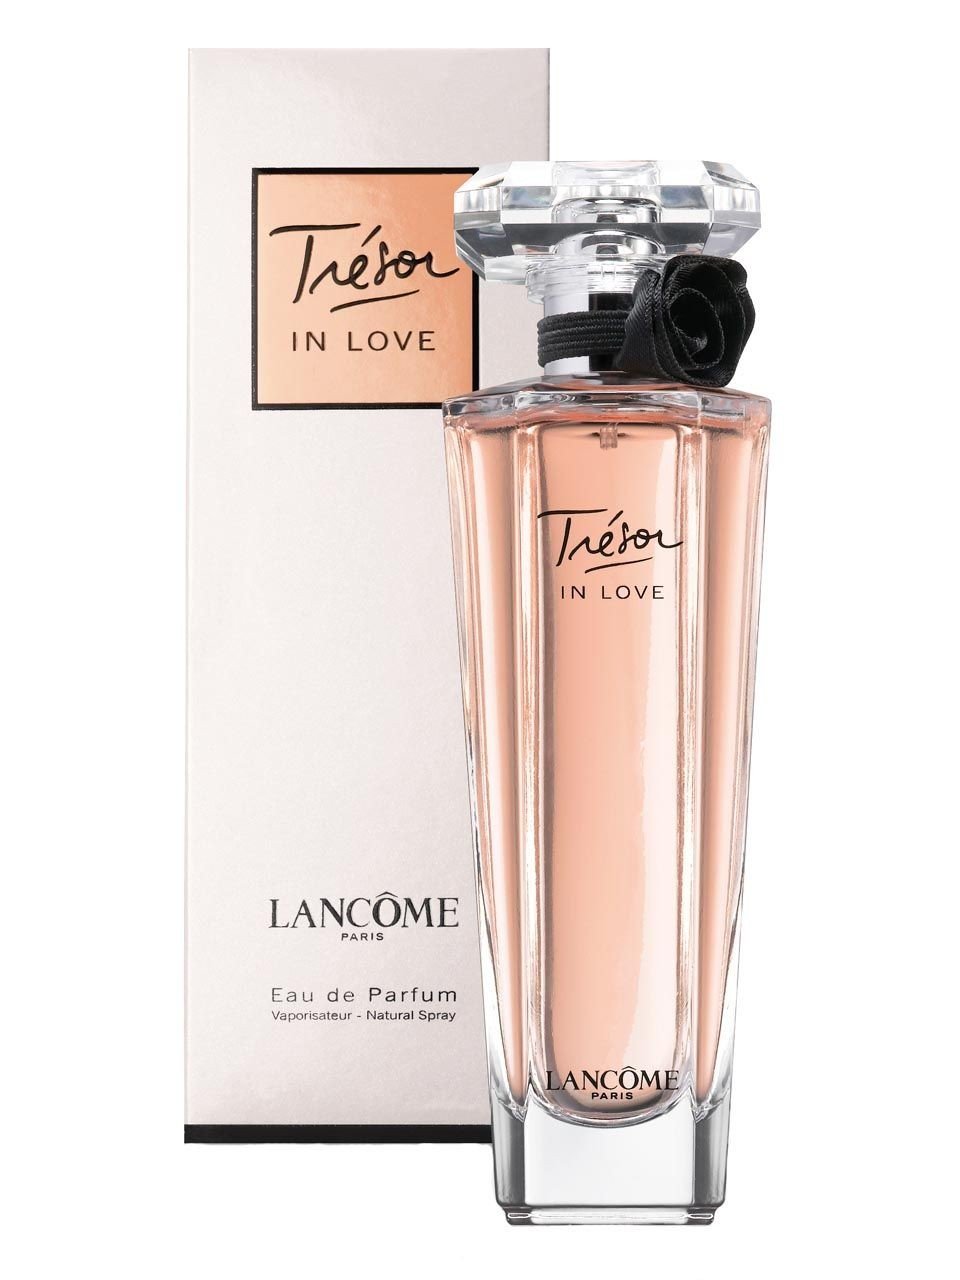 Tresor In Love by Lancome for Women 2.5 oz EDP Spray